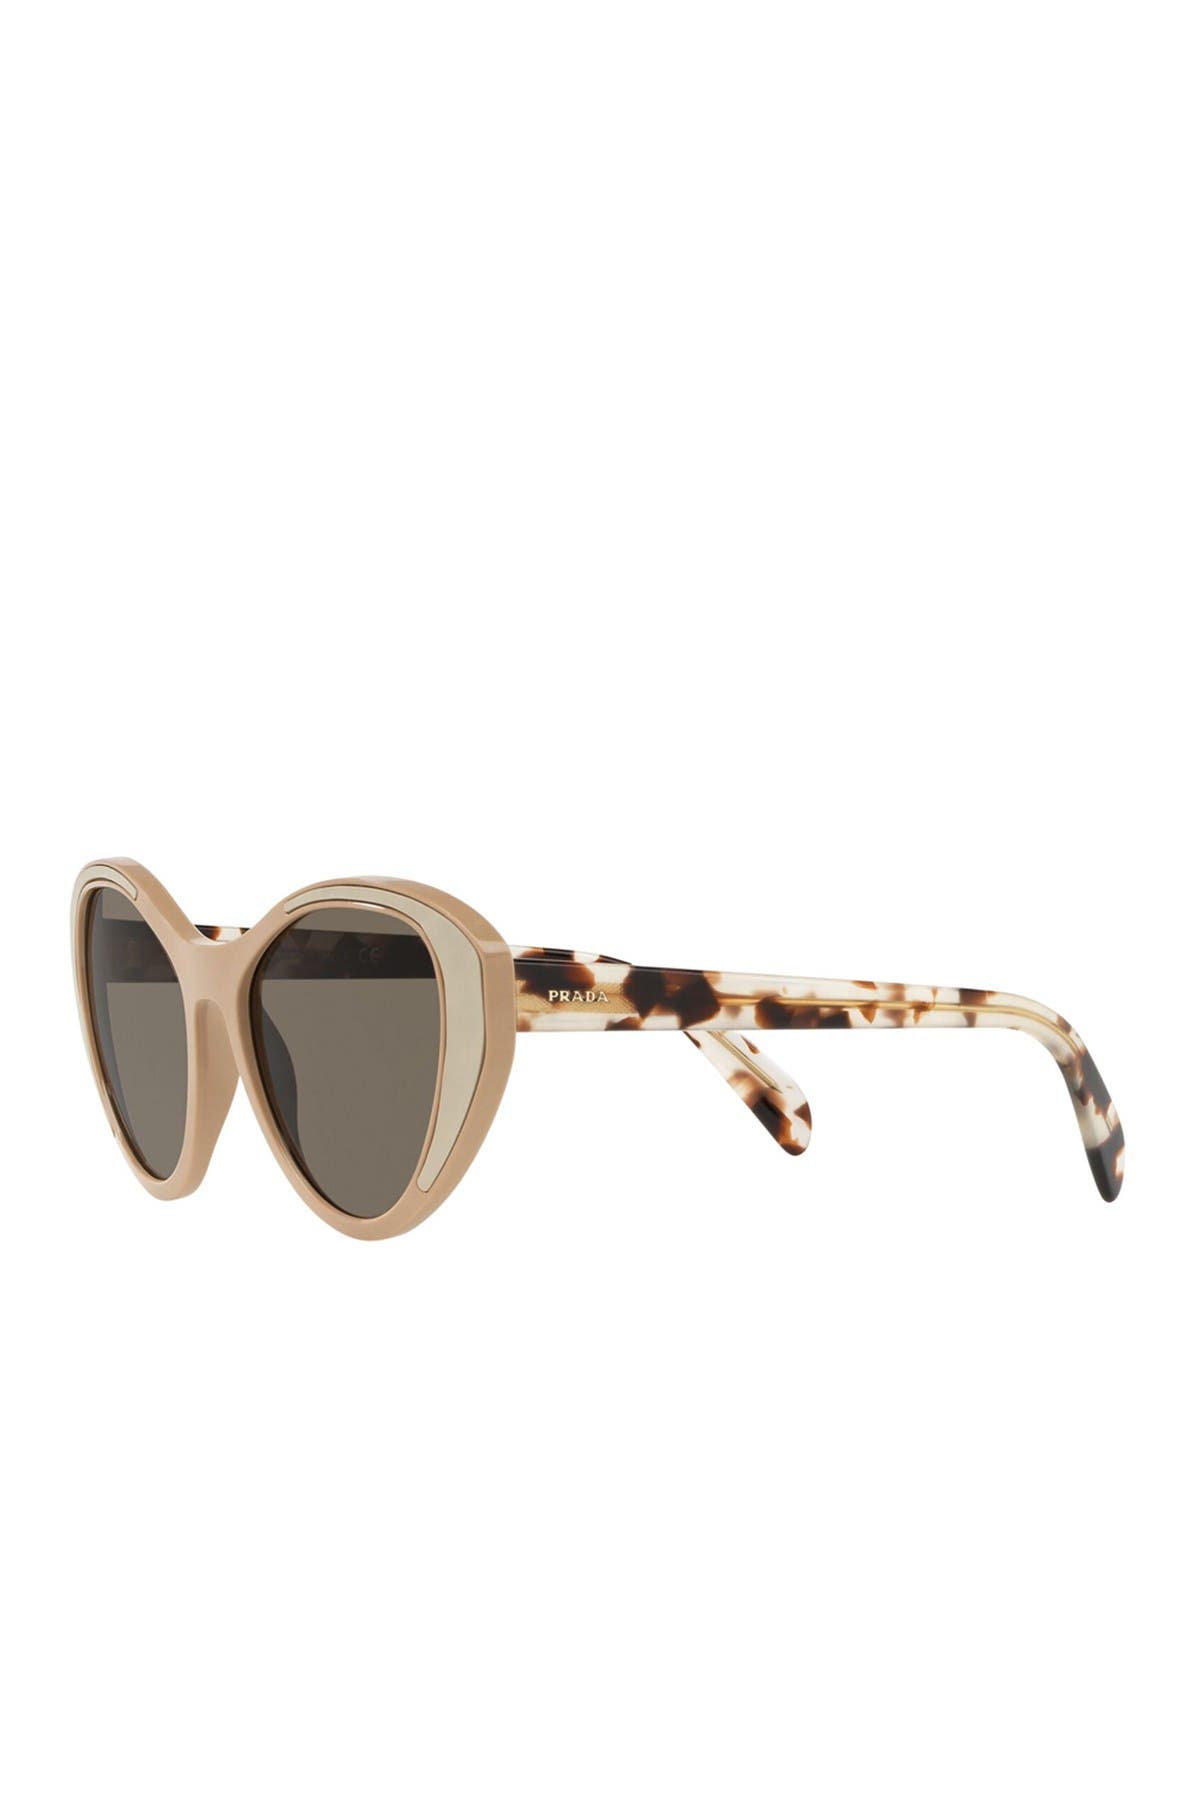 Prada | 55mm Cat Eye Sunglasses | Nordstrom Rack